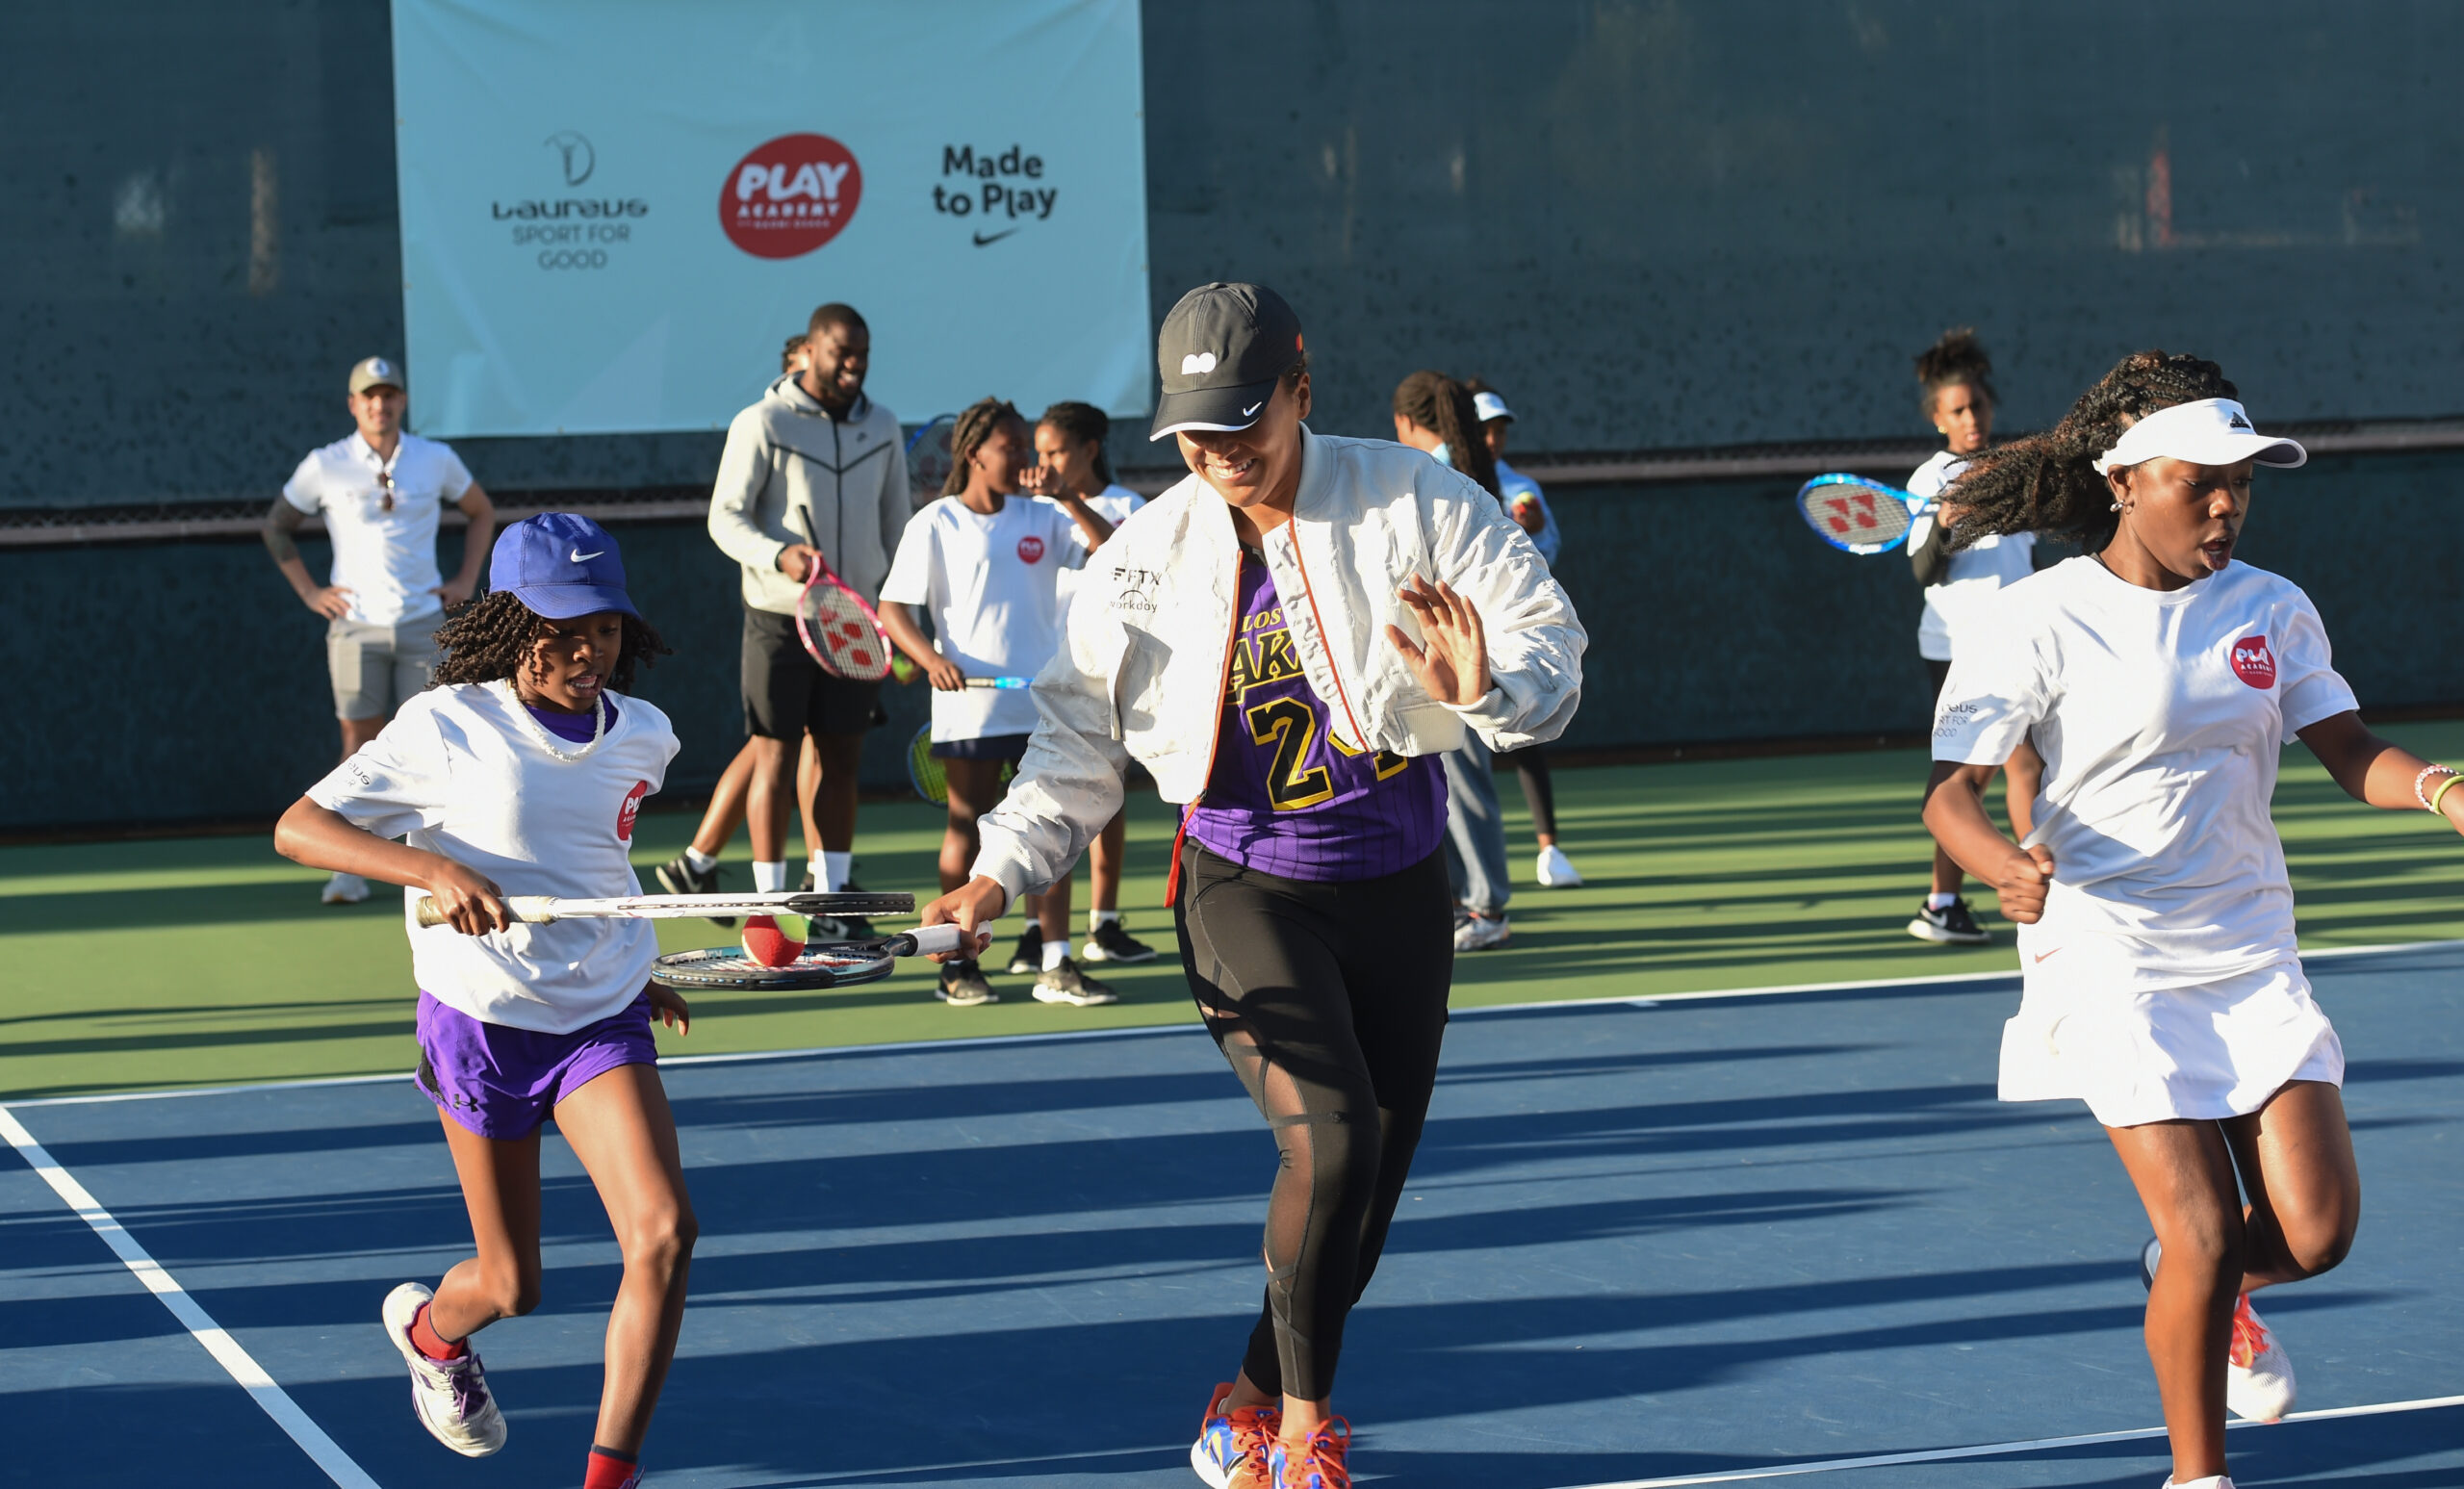 Naomi Osaka playing on tennis court with girls